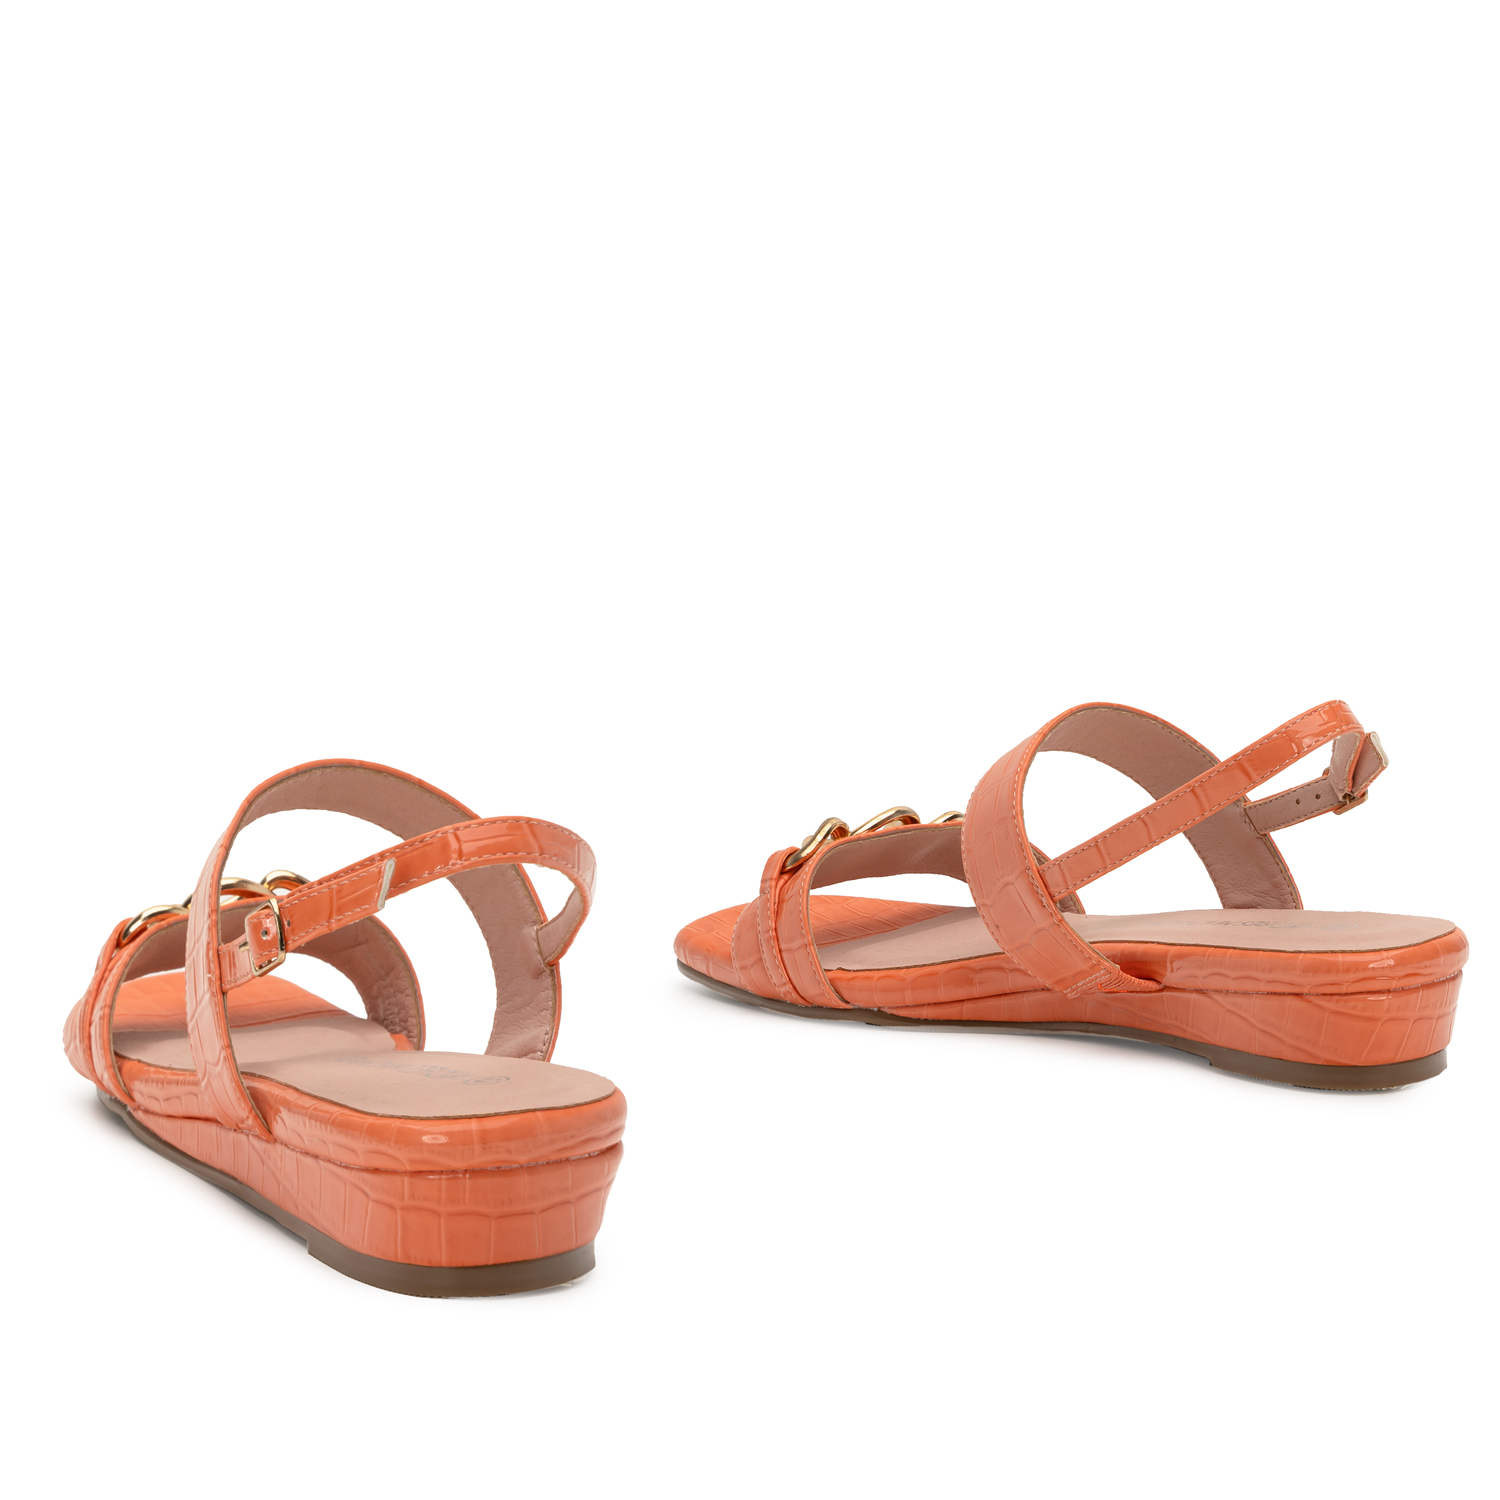 Sandalen aus orangem Lacklederimitat 